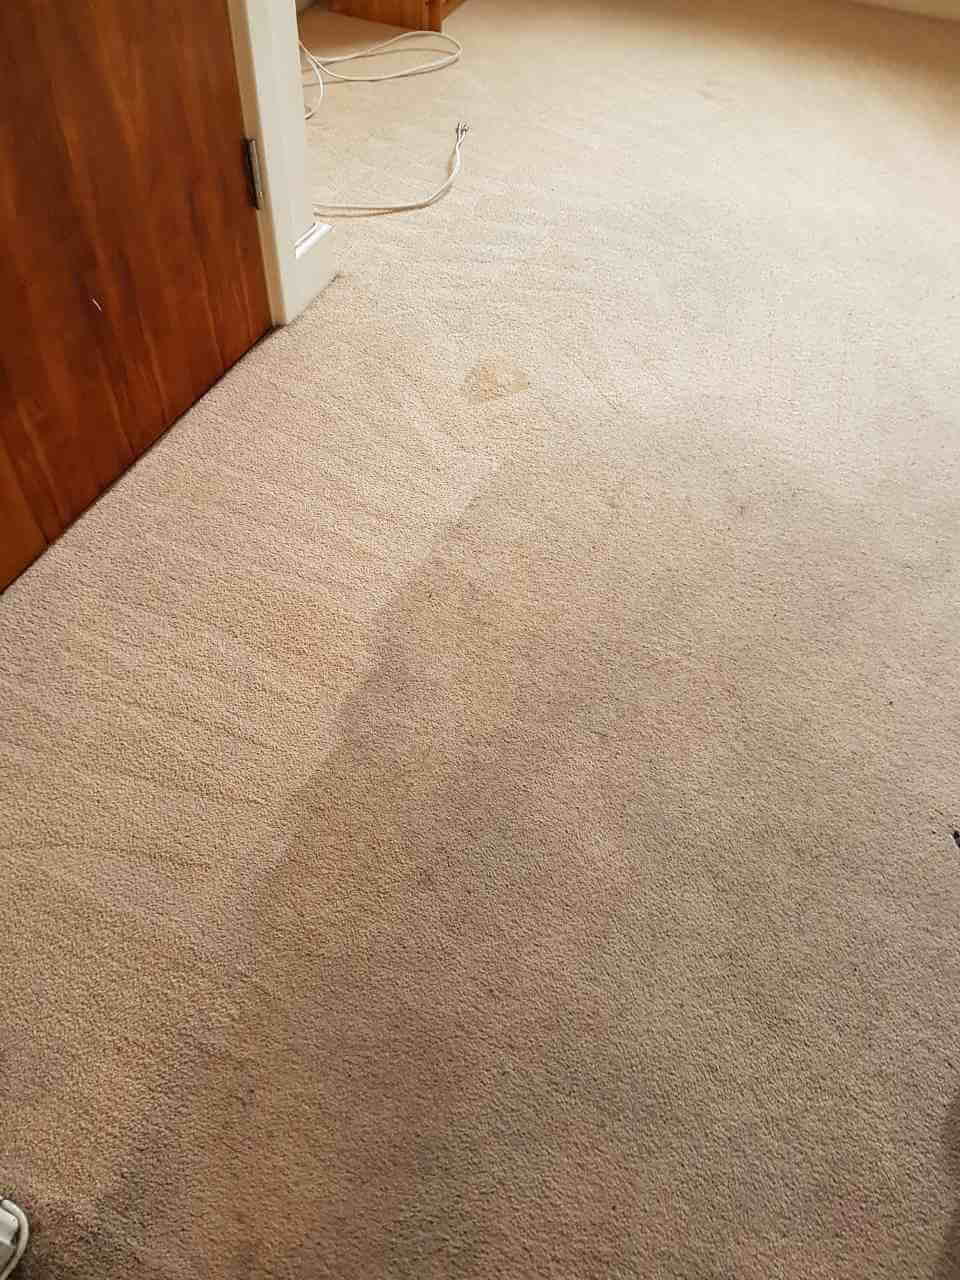 HA0 carpet cleaning